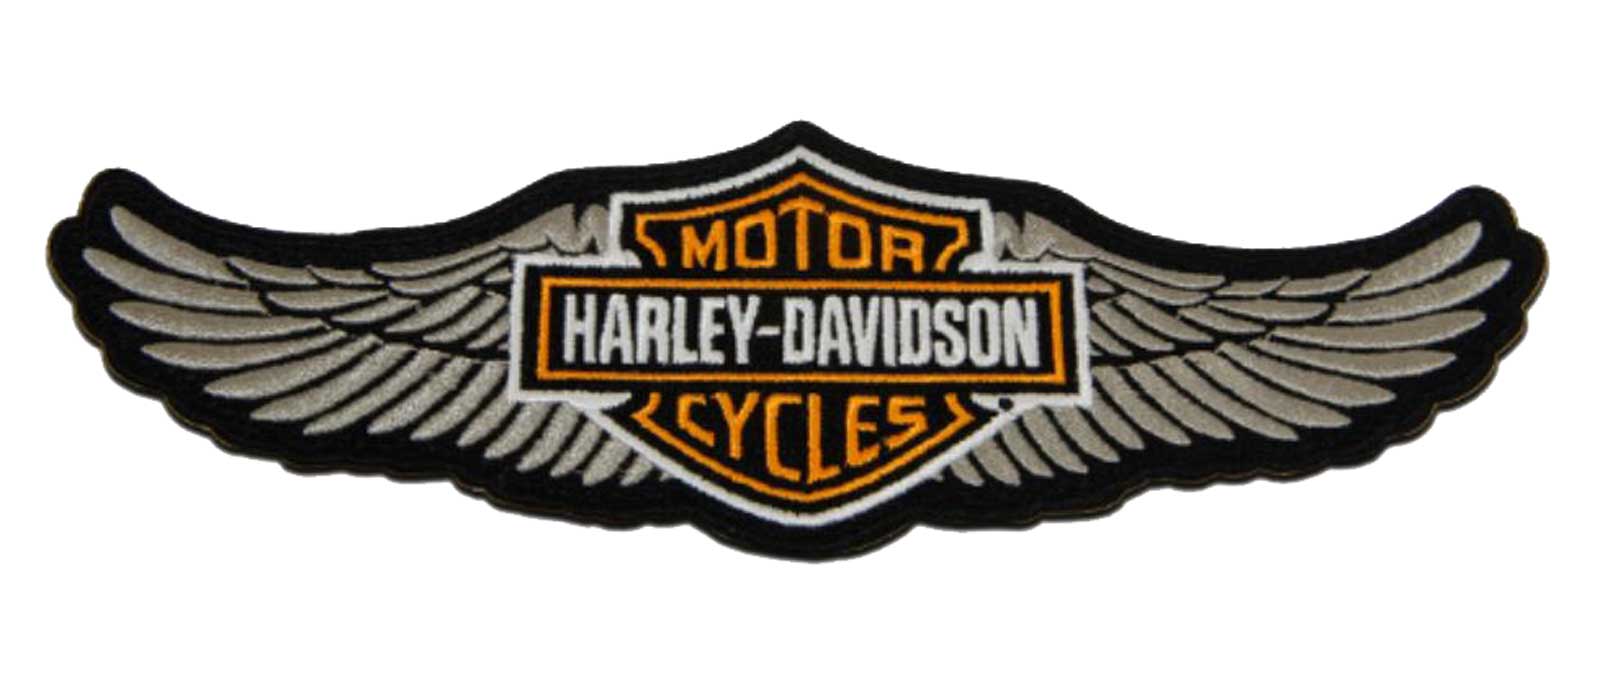 original harley davidson logo with wings